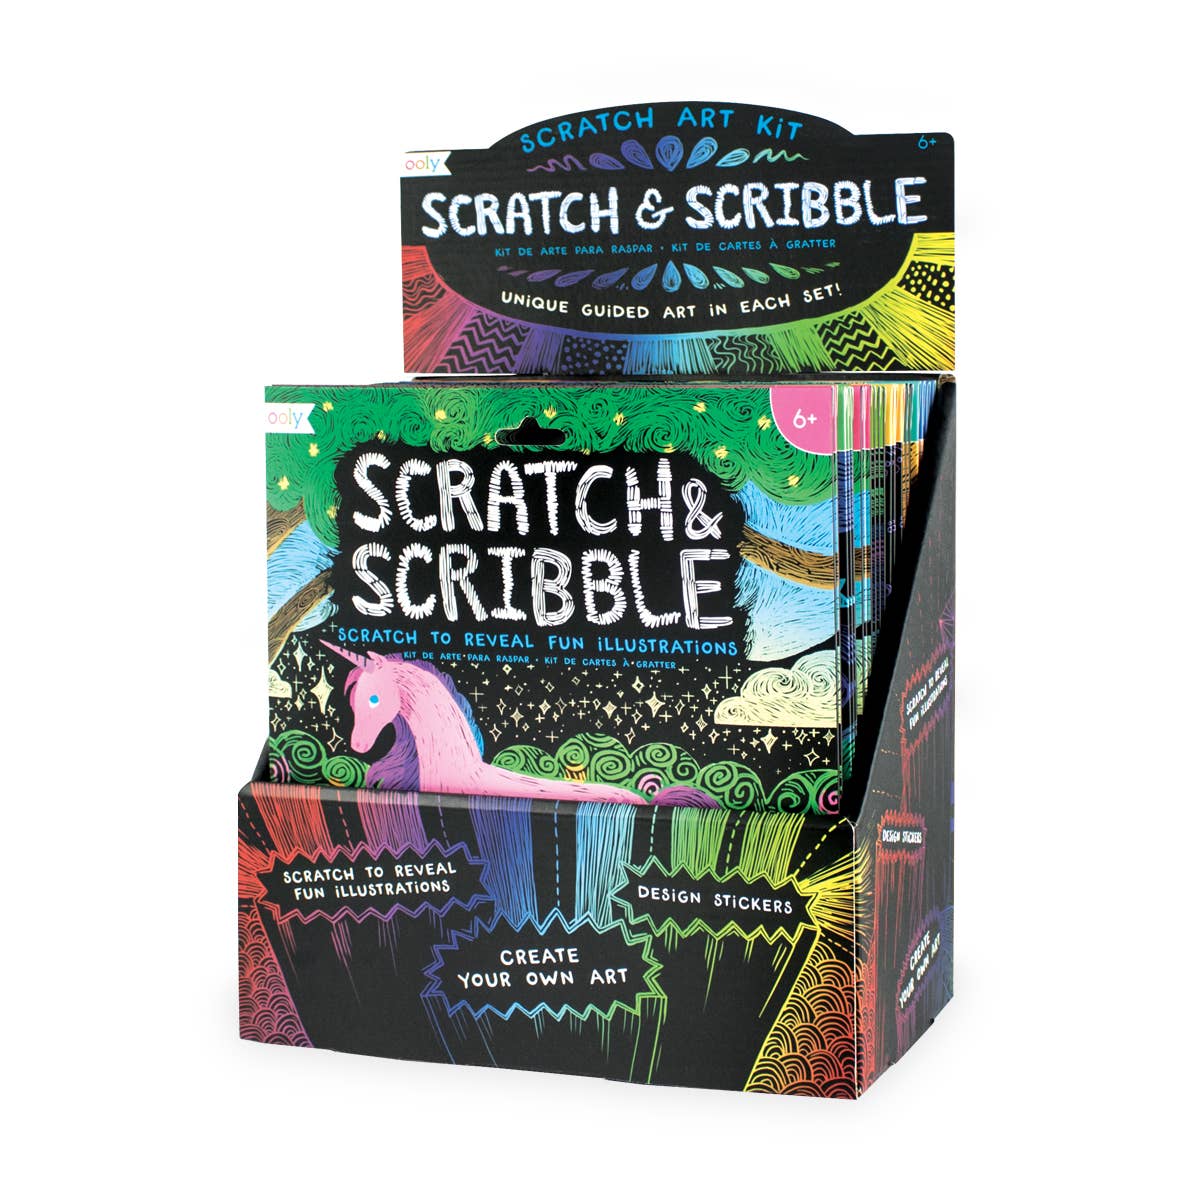 *Scratch & Scribble